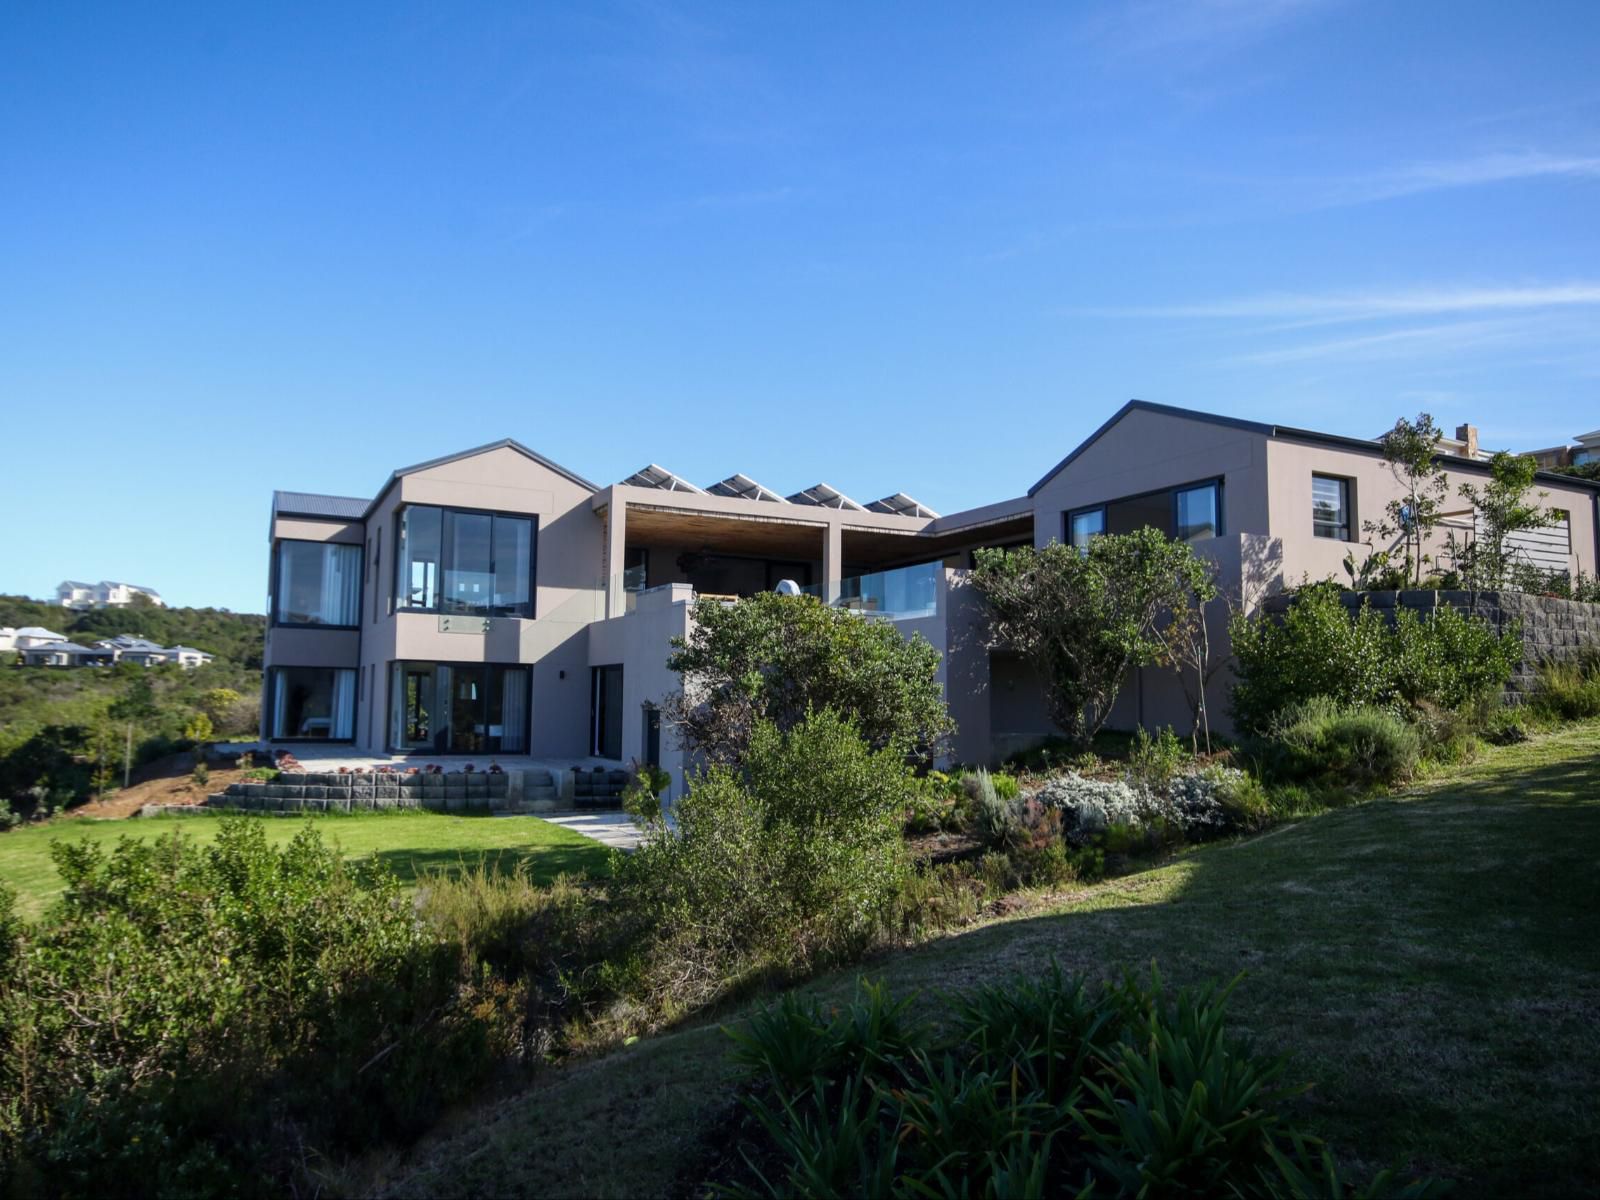 Zachtours Ch Guest House Brackenridge Plettenberg Bay Western Cape South Africa House, Building, Architecture